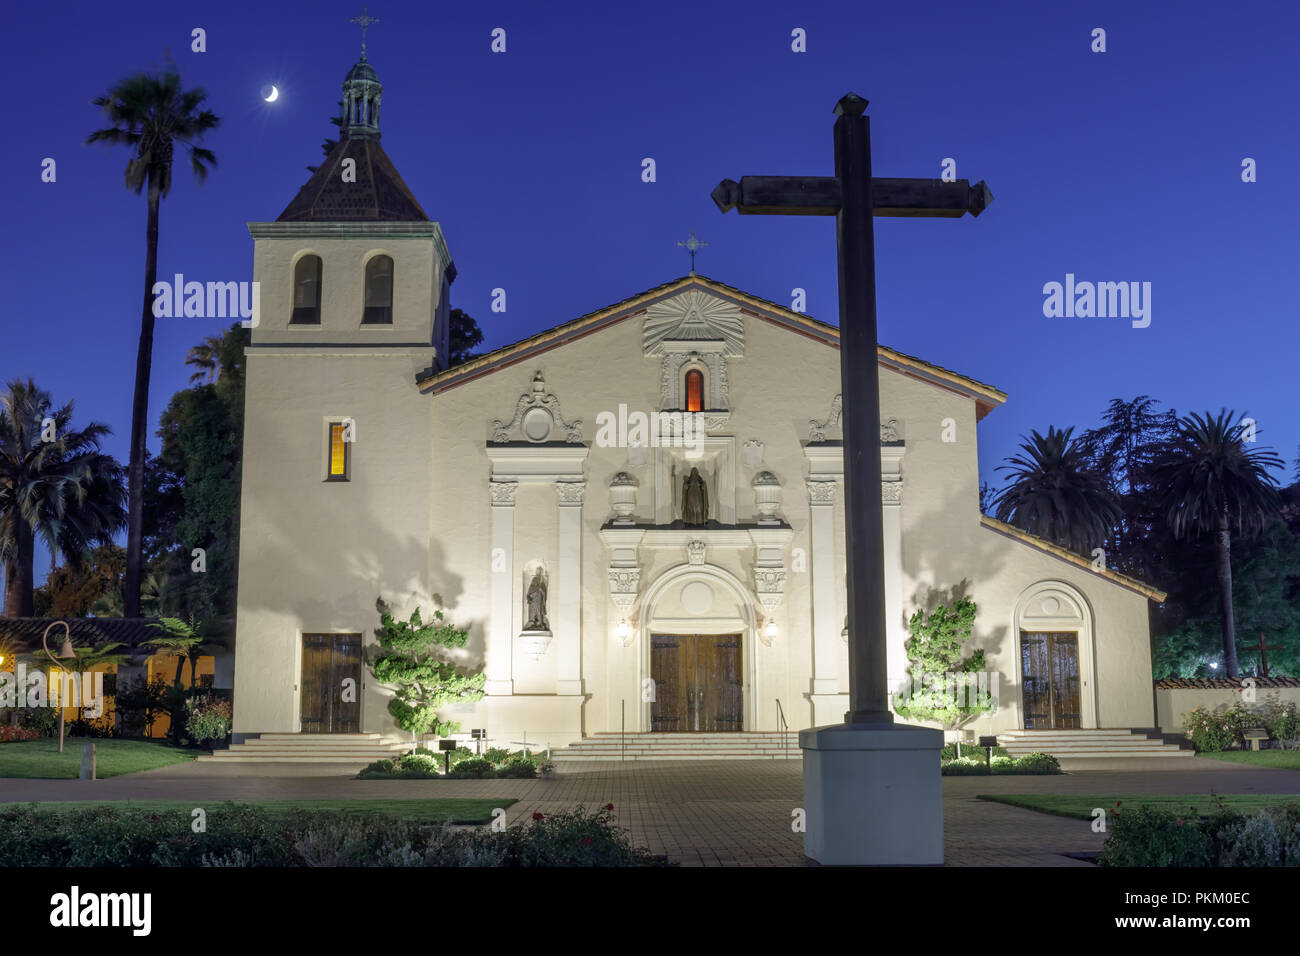 Santa Clara, Kalifornien - 13. September 2018: die Fassade der Kirche die Mission Santa Clara de Asis. Stockfoto